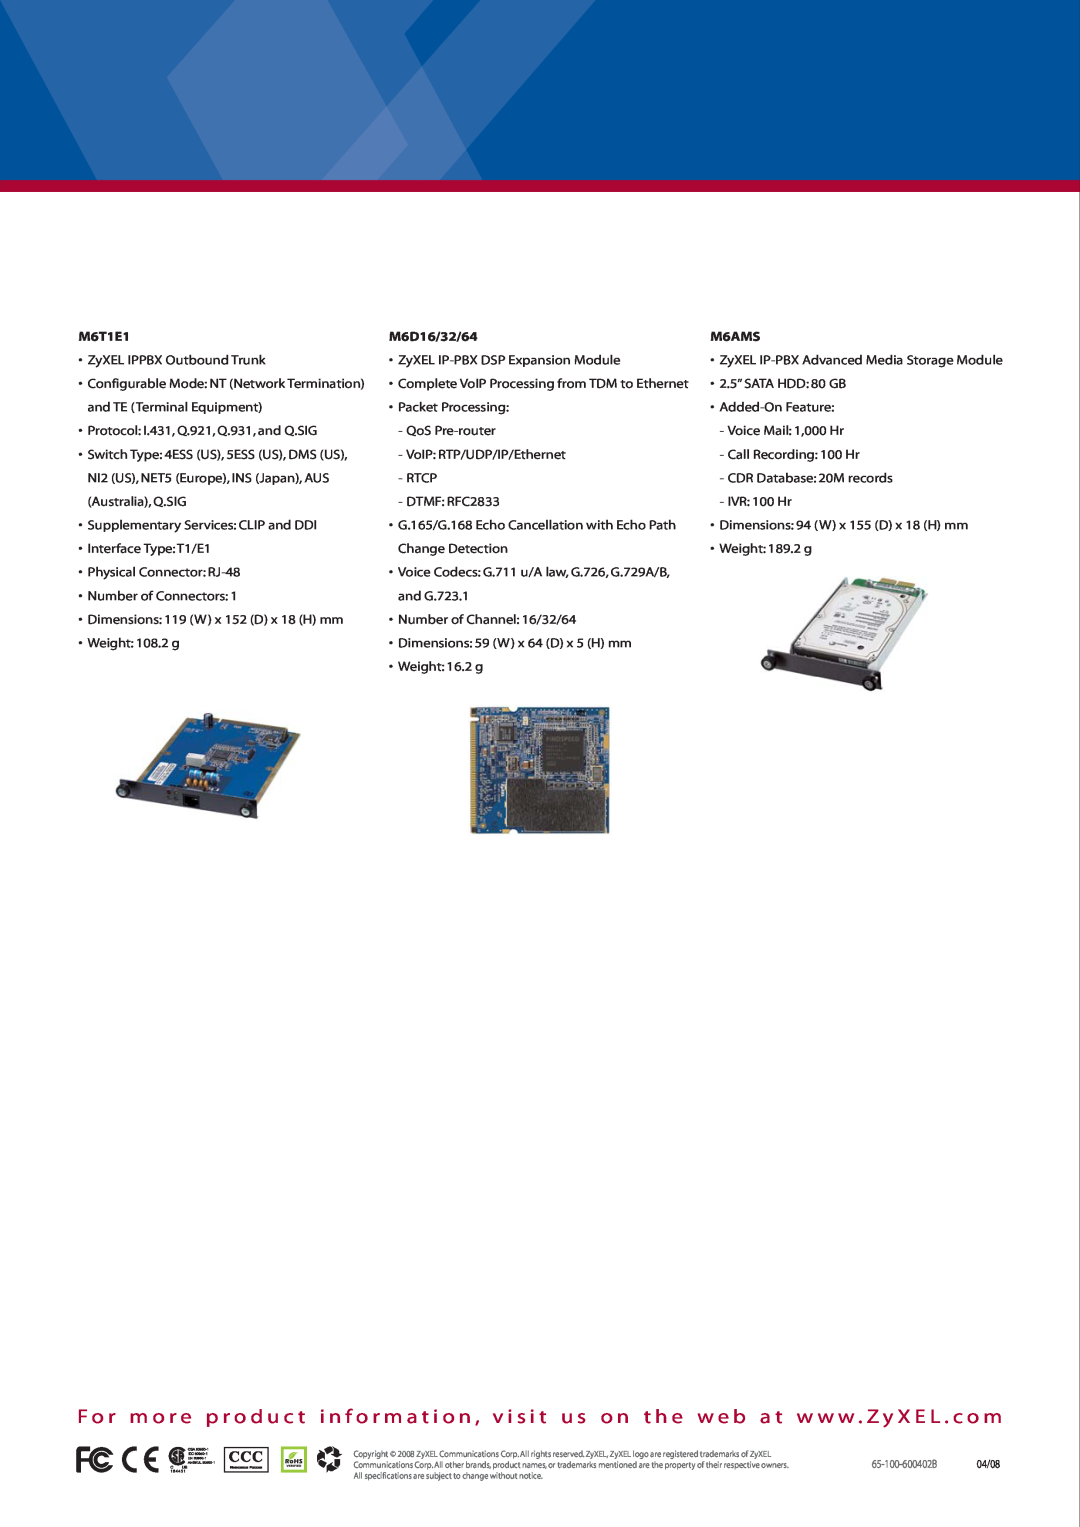 ZyXEL Communications X6004 manual M6T1E1, M6D16/32/64, M6AMS, ZyXEL IP-PBX Advanced Media Storage Module 